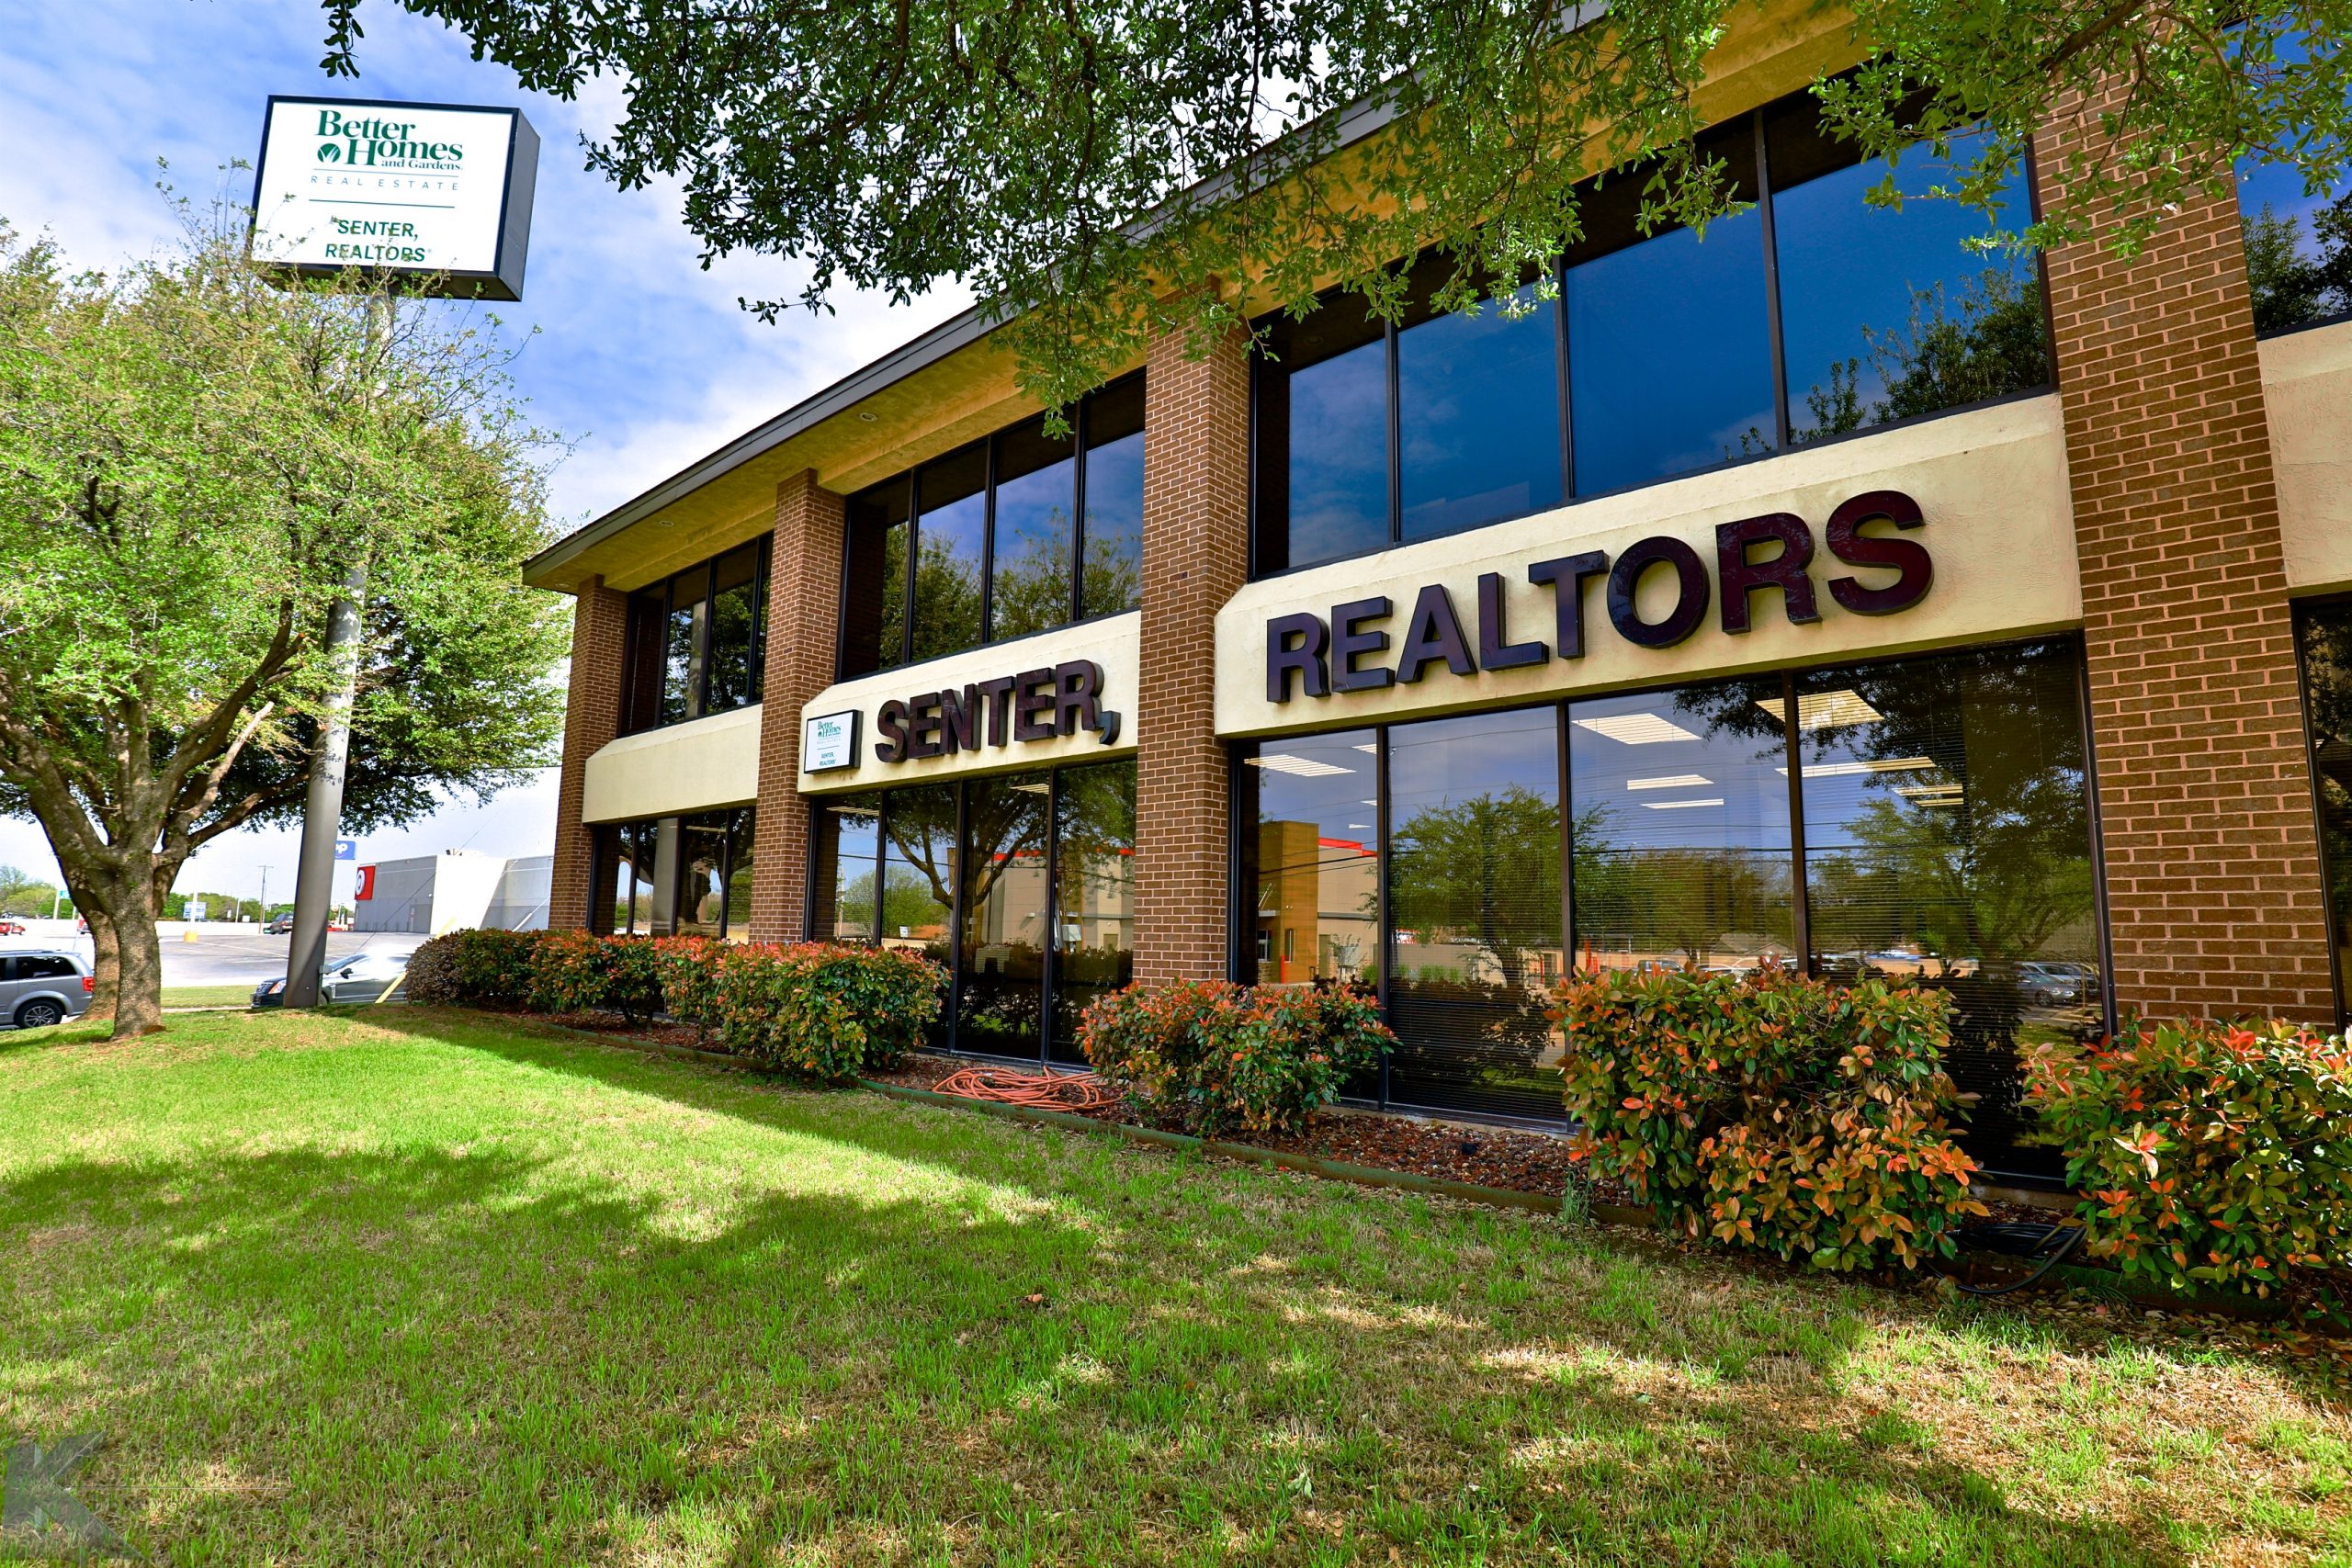 Abilene real estate office. Residential and commercial REALTORS.